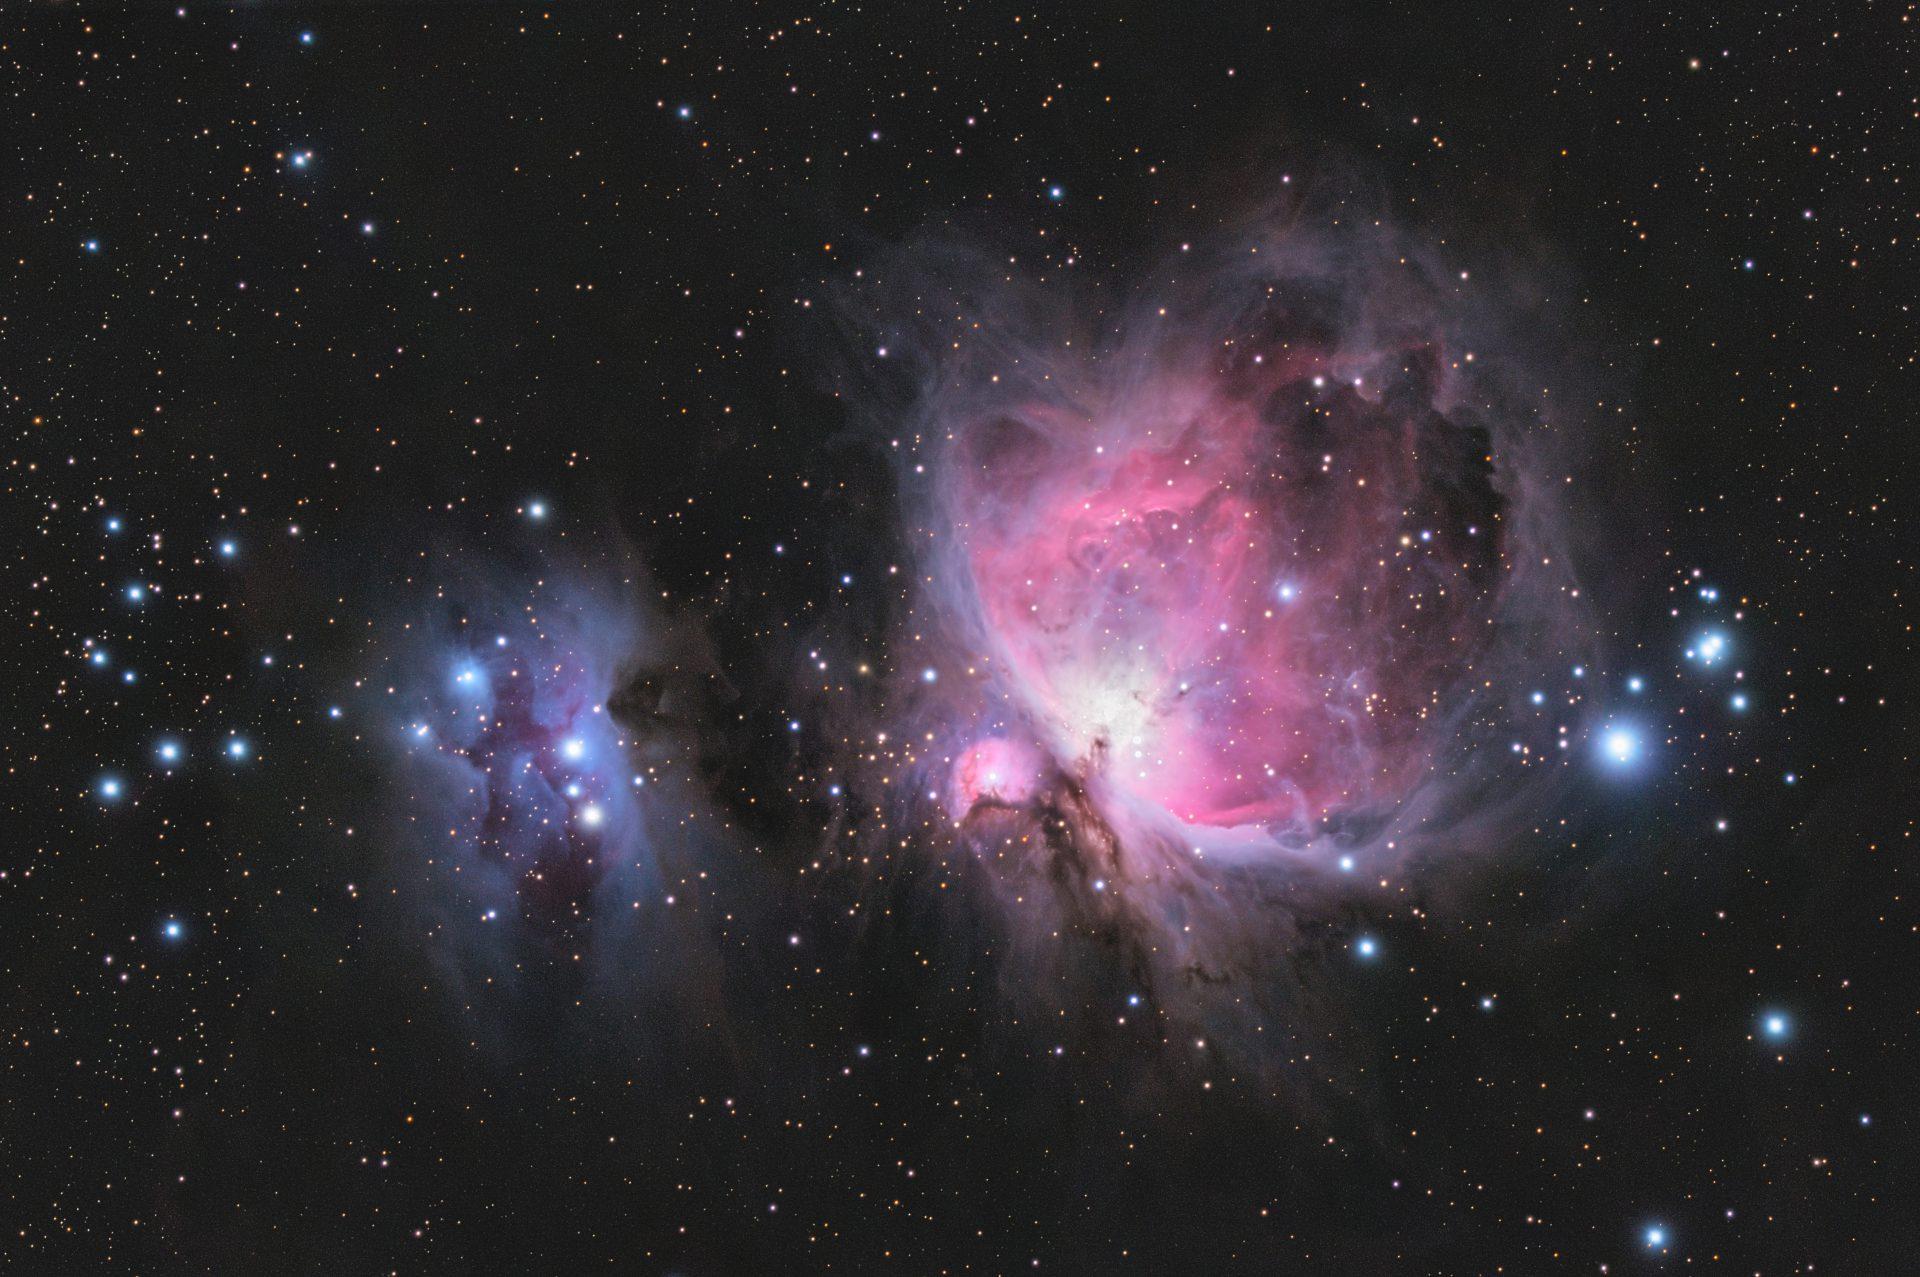 Orion Nebula | Jacob Deane - geek, photographer, engineer